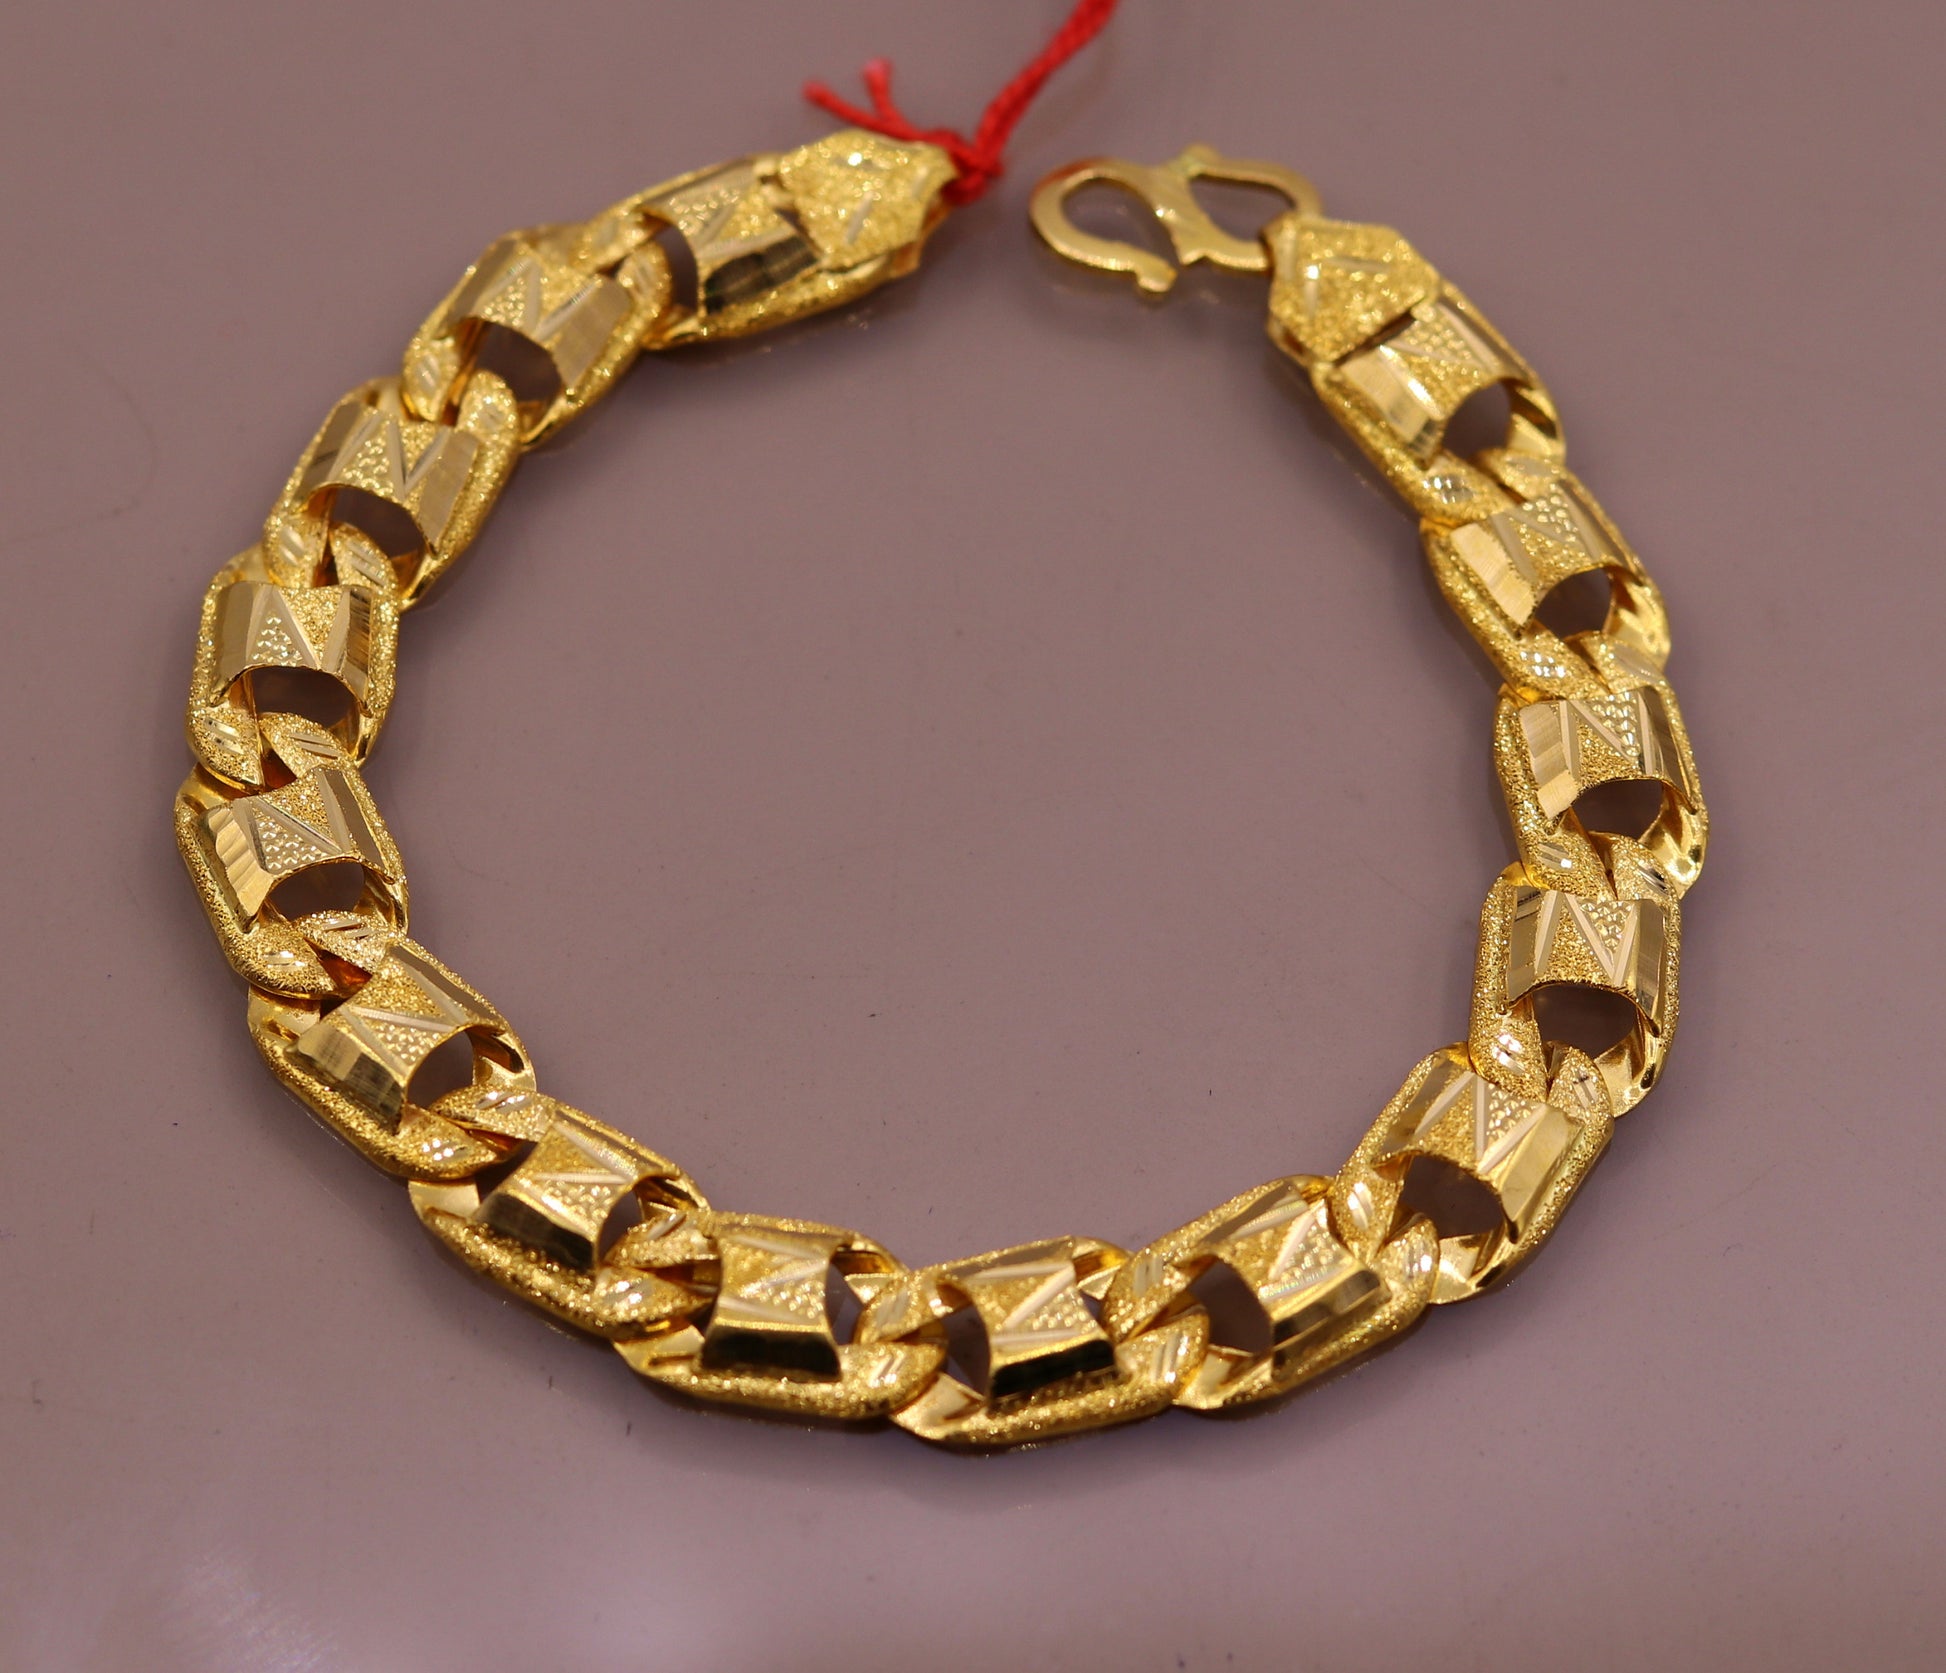 Amazing 22kt yellow gold handcrafted gorgeous design diamond cut designer flexible bracelet unique new stylish unisex bracelet jewelry - TRIBAL ORNAMENTS